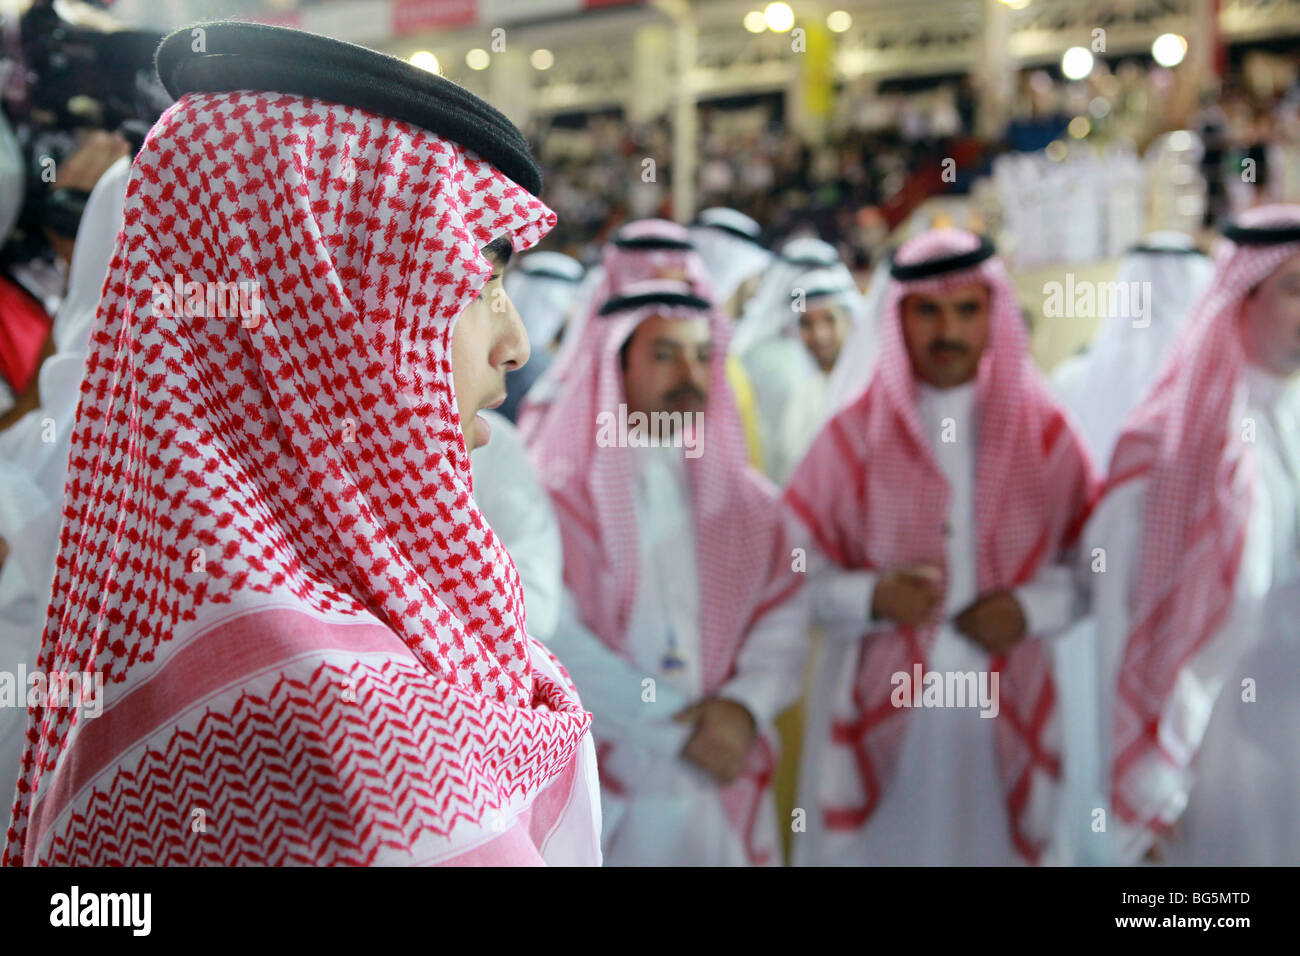 Men in traditional clothing, Dubai, United Arab Emirates Stock Photo